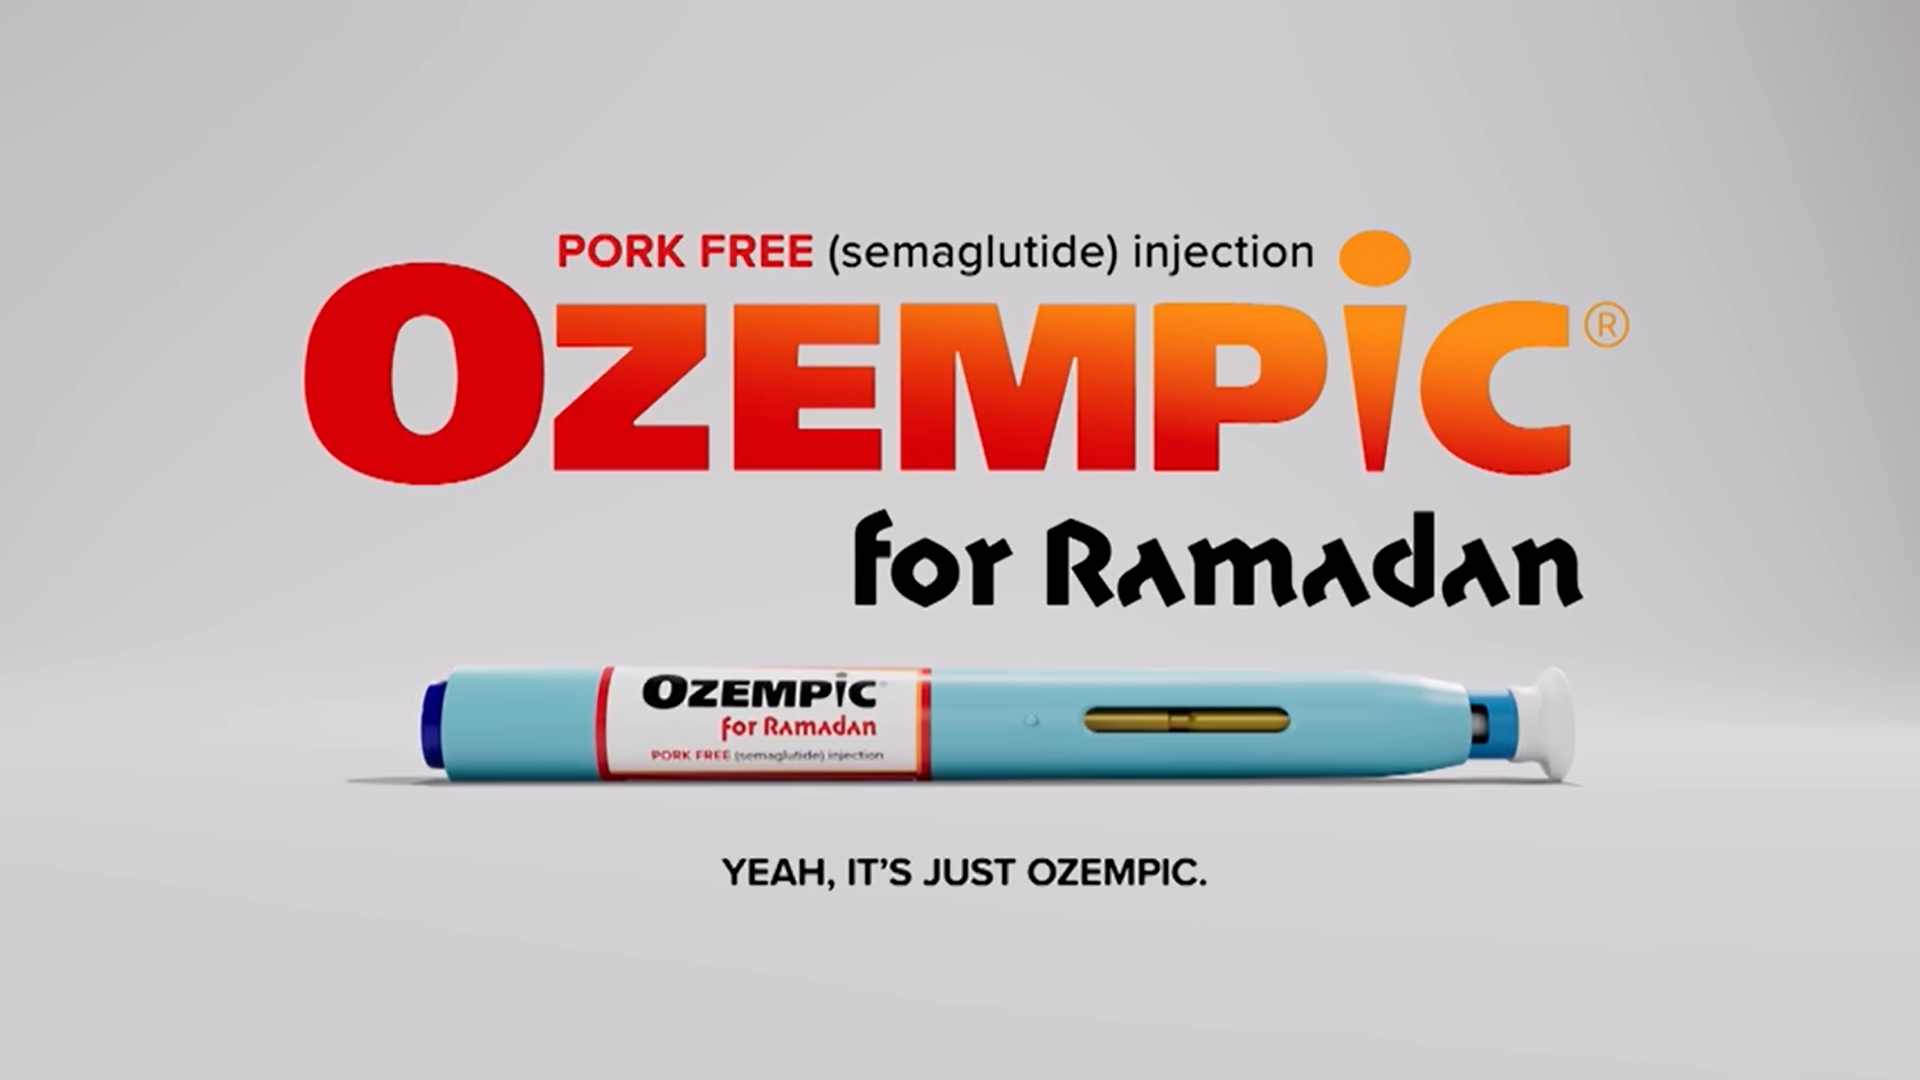 'Saturday Night Live' sends up Ozempic craze in Ramadan-themed parody ad